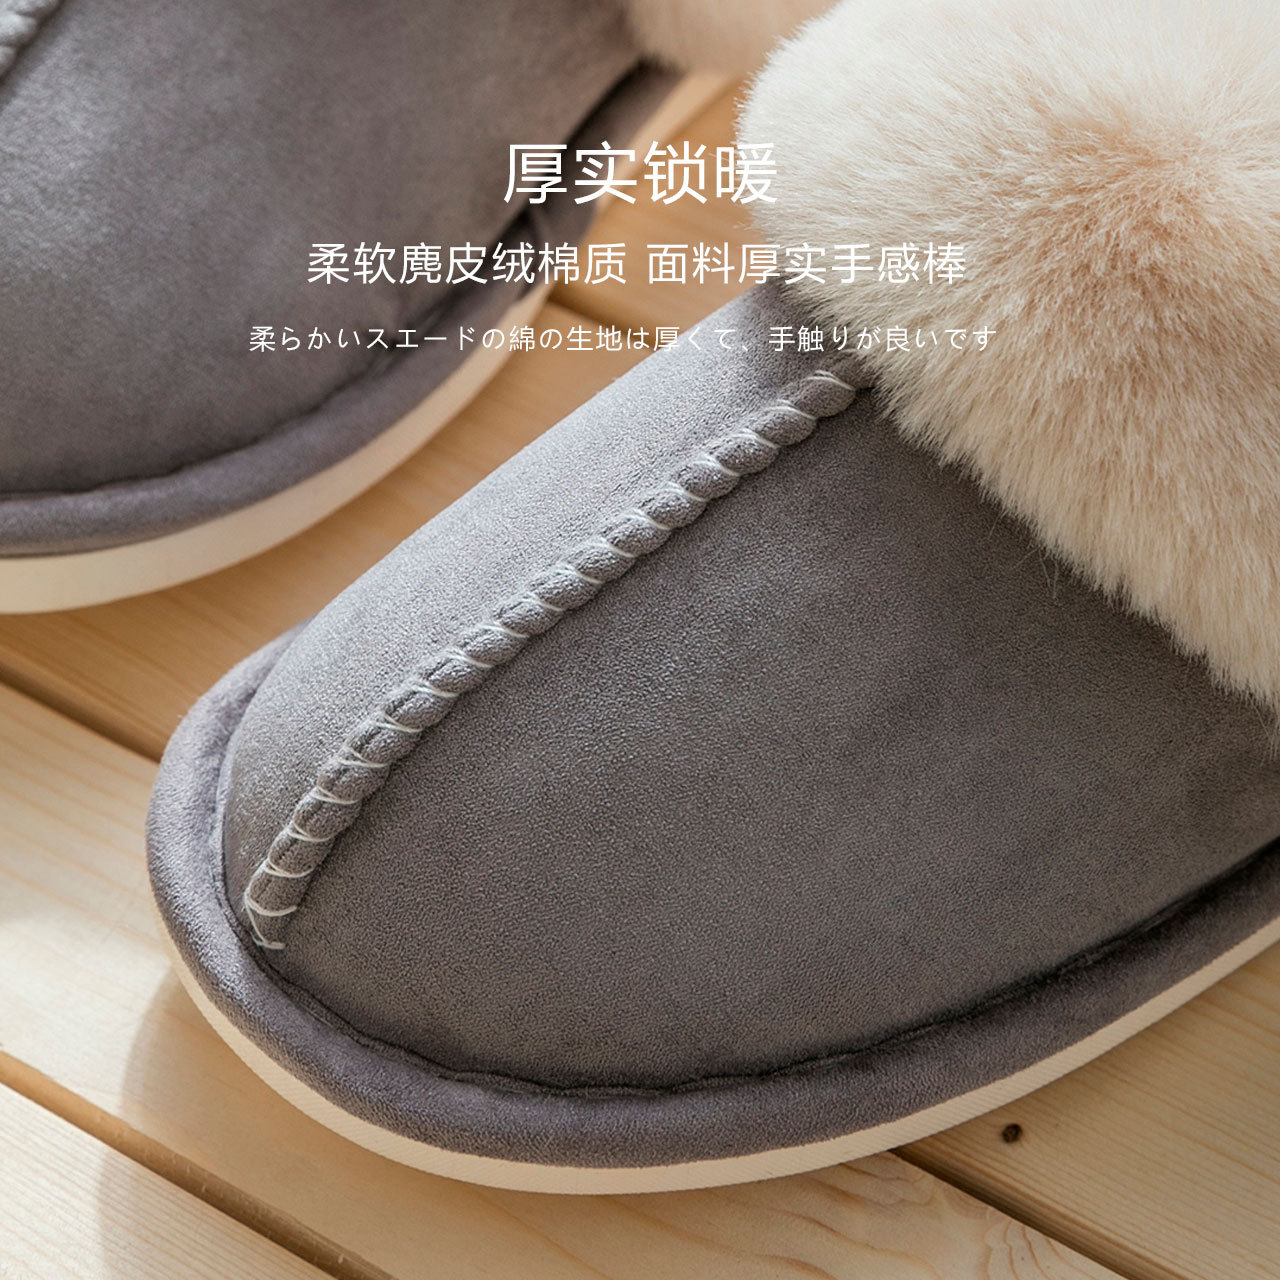 fujin New Autumn Winter Women Men Slippers Bottom Soft Home Shoe Cotton Slippers Indoor Slip On Slides Comfortable Shoe Slippers